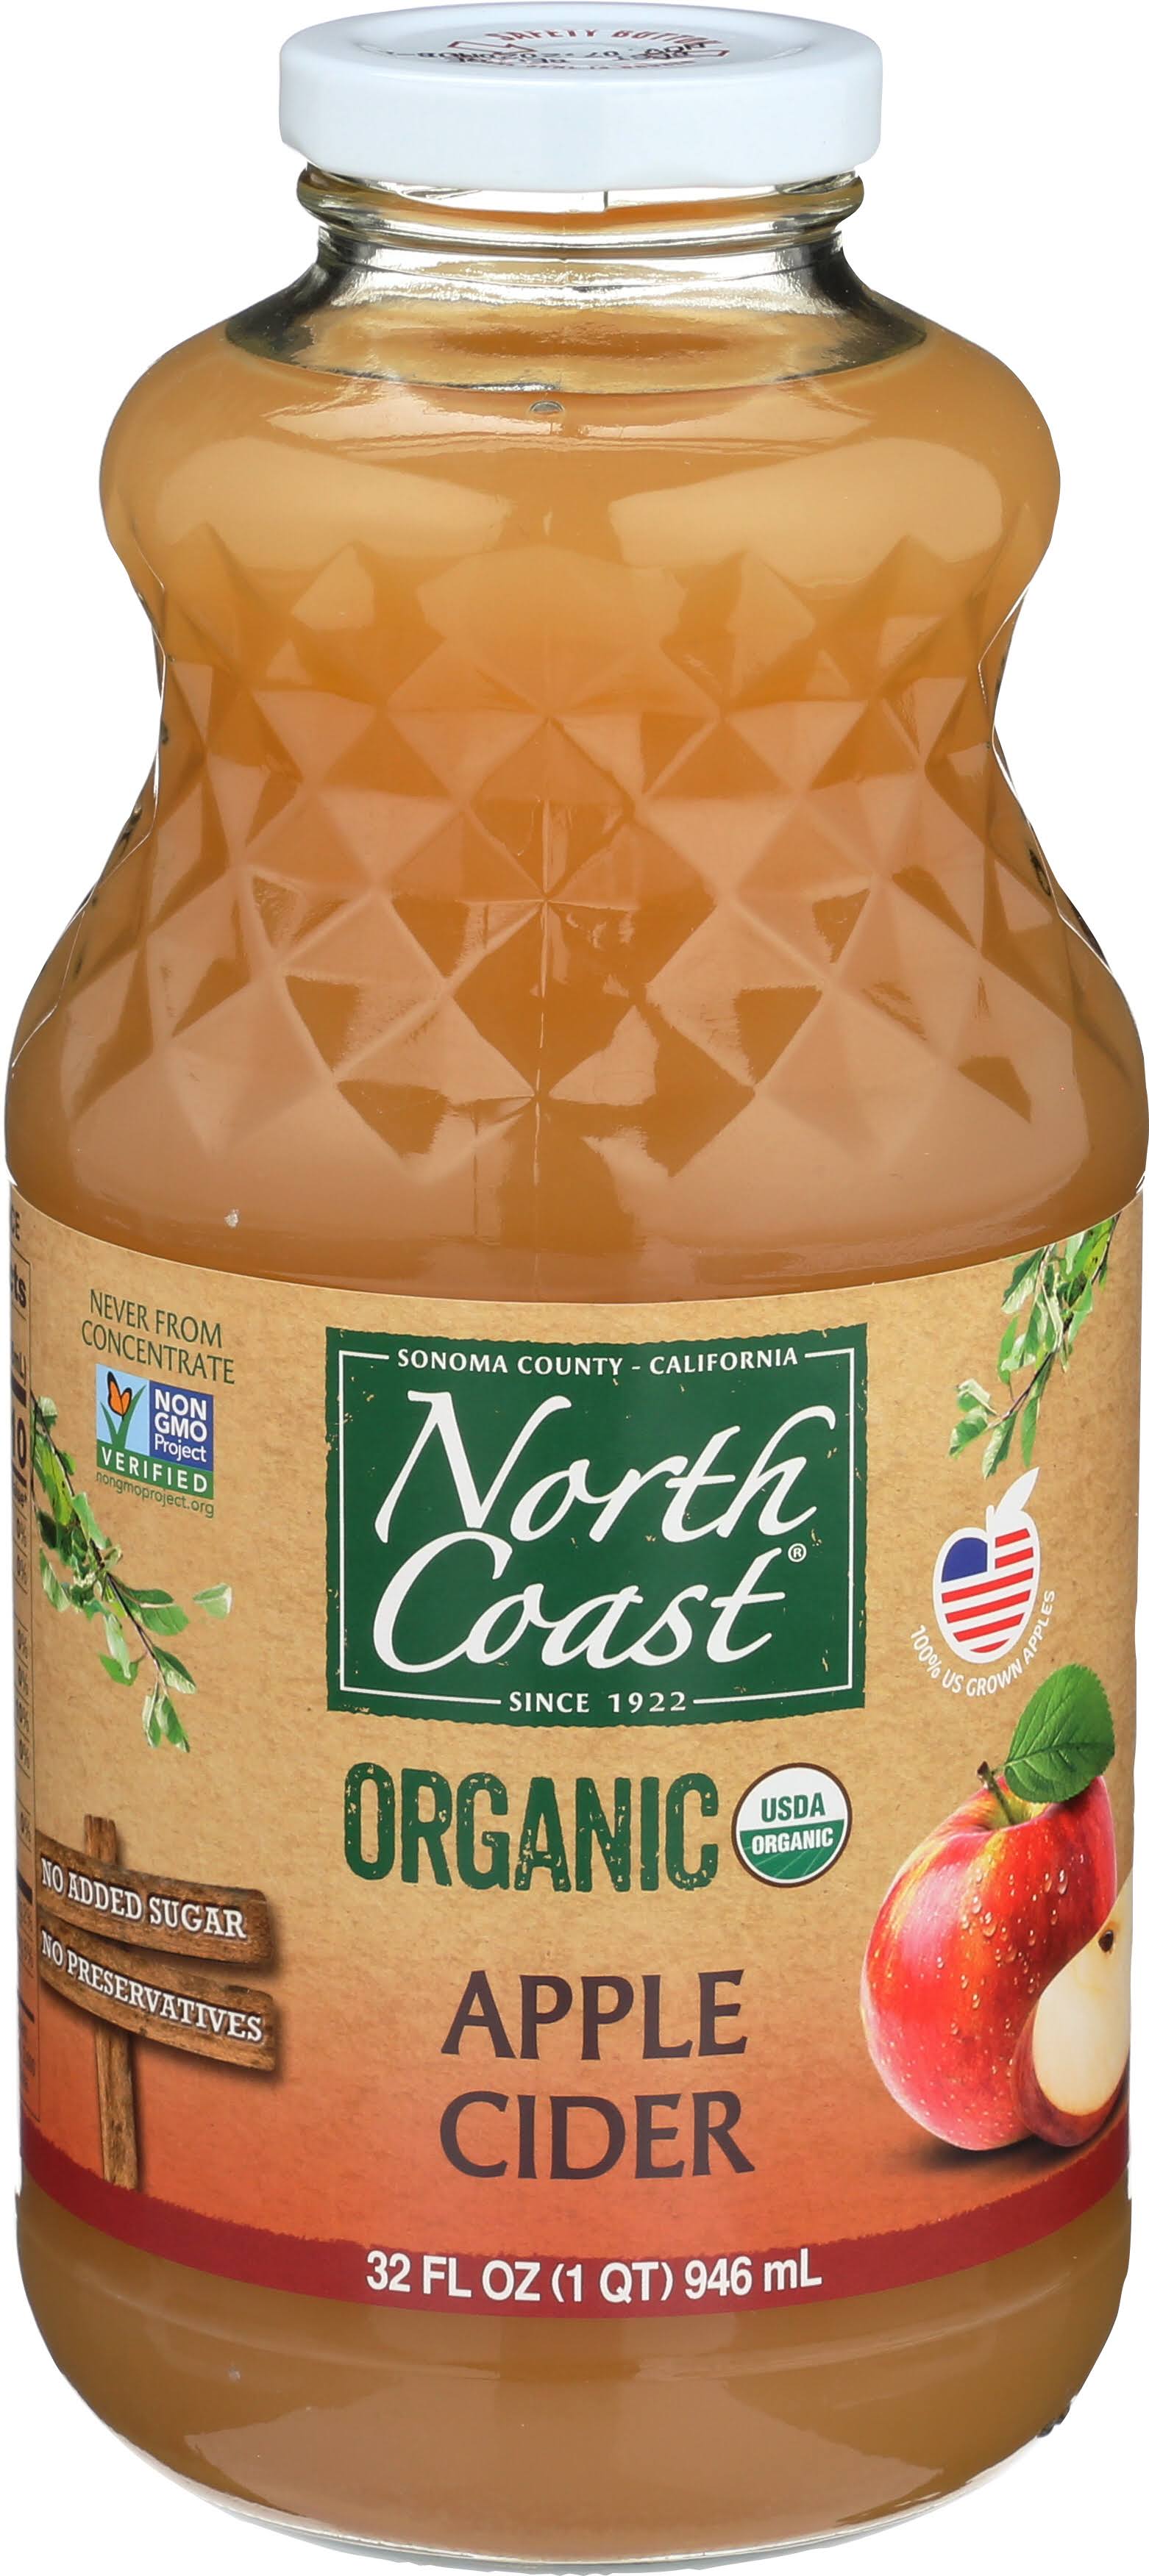 North Coast Apple Cider, Organic - 32 fl oz